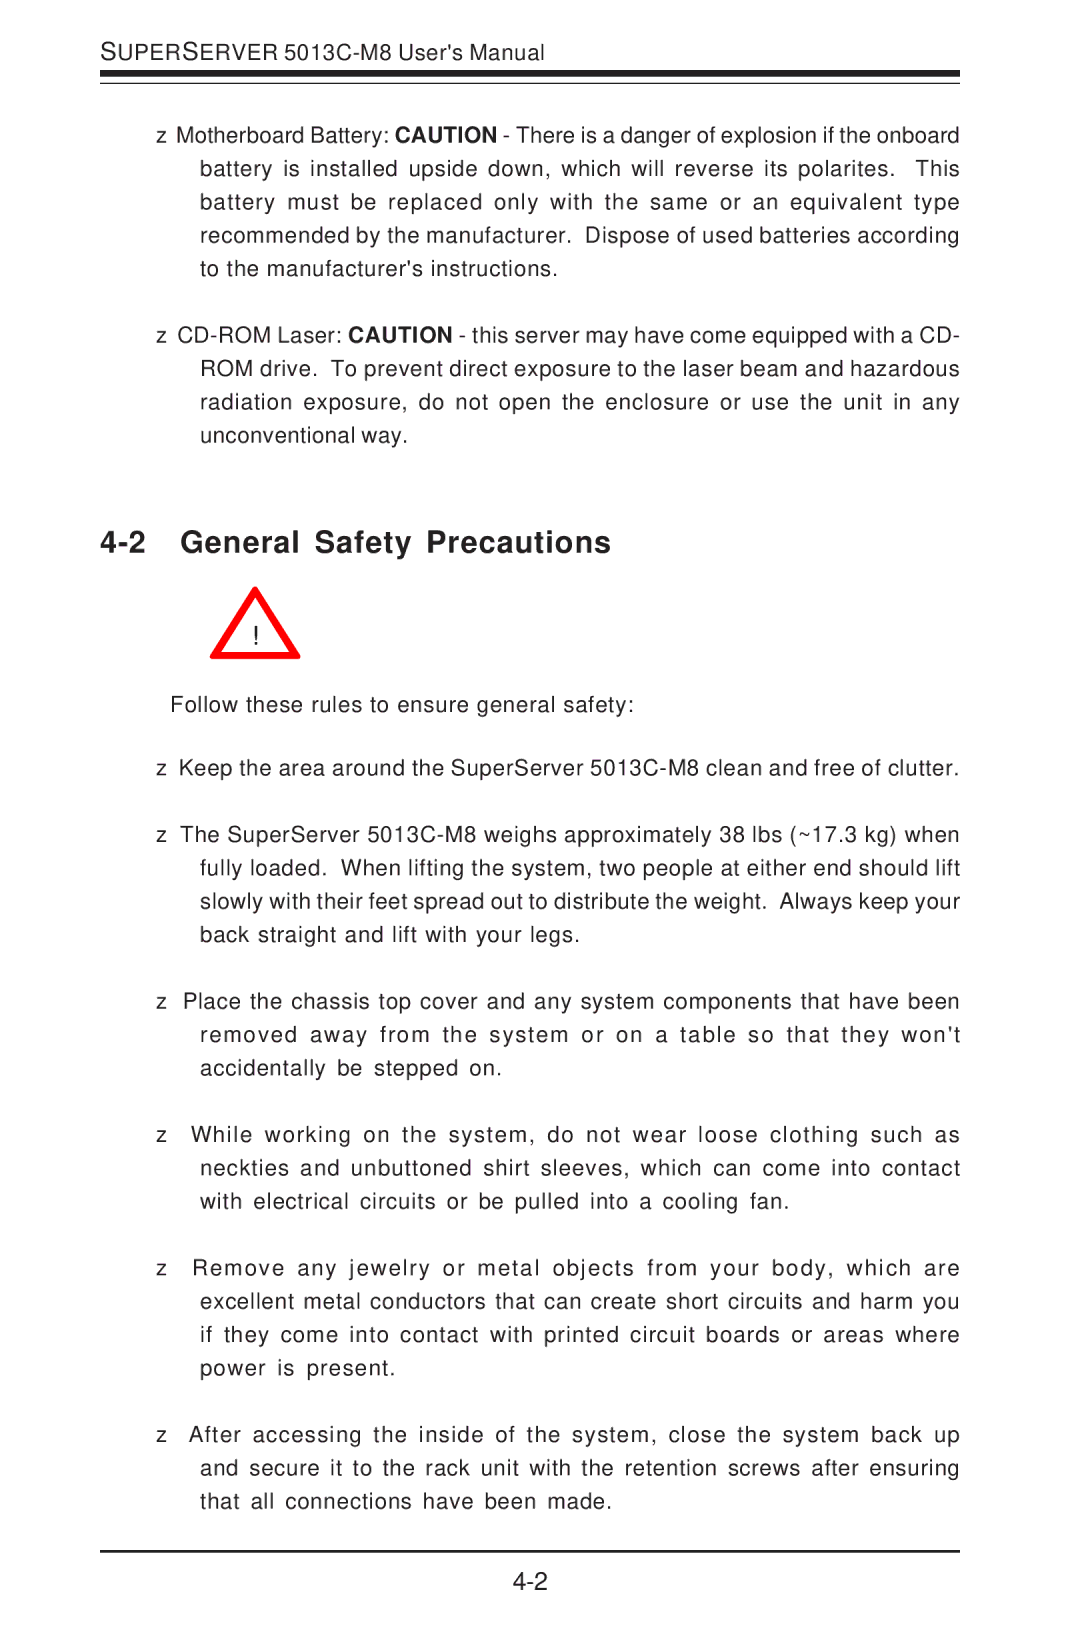 SUPER MICRO Computer 5013C-M8 user manual General Safety Precautions 